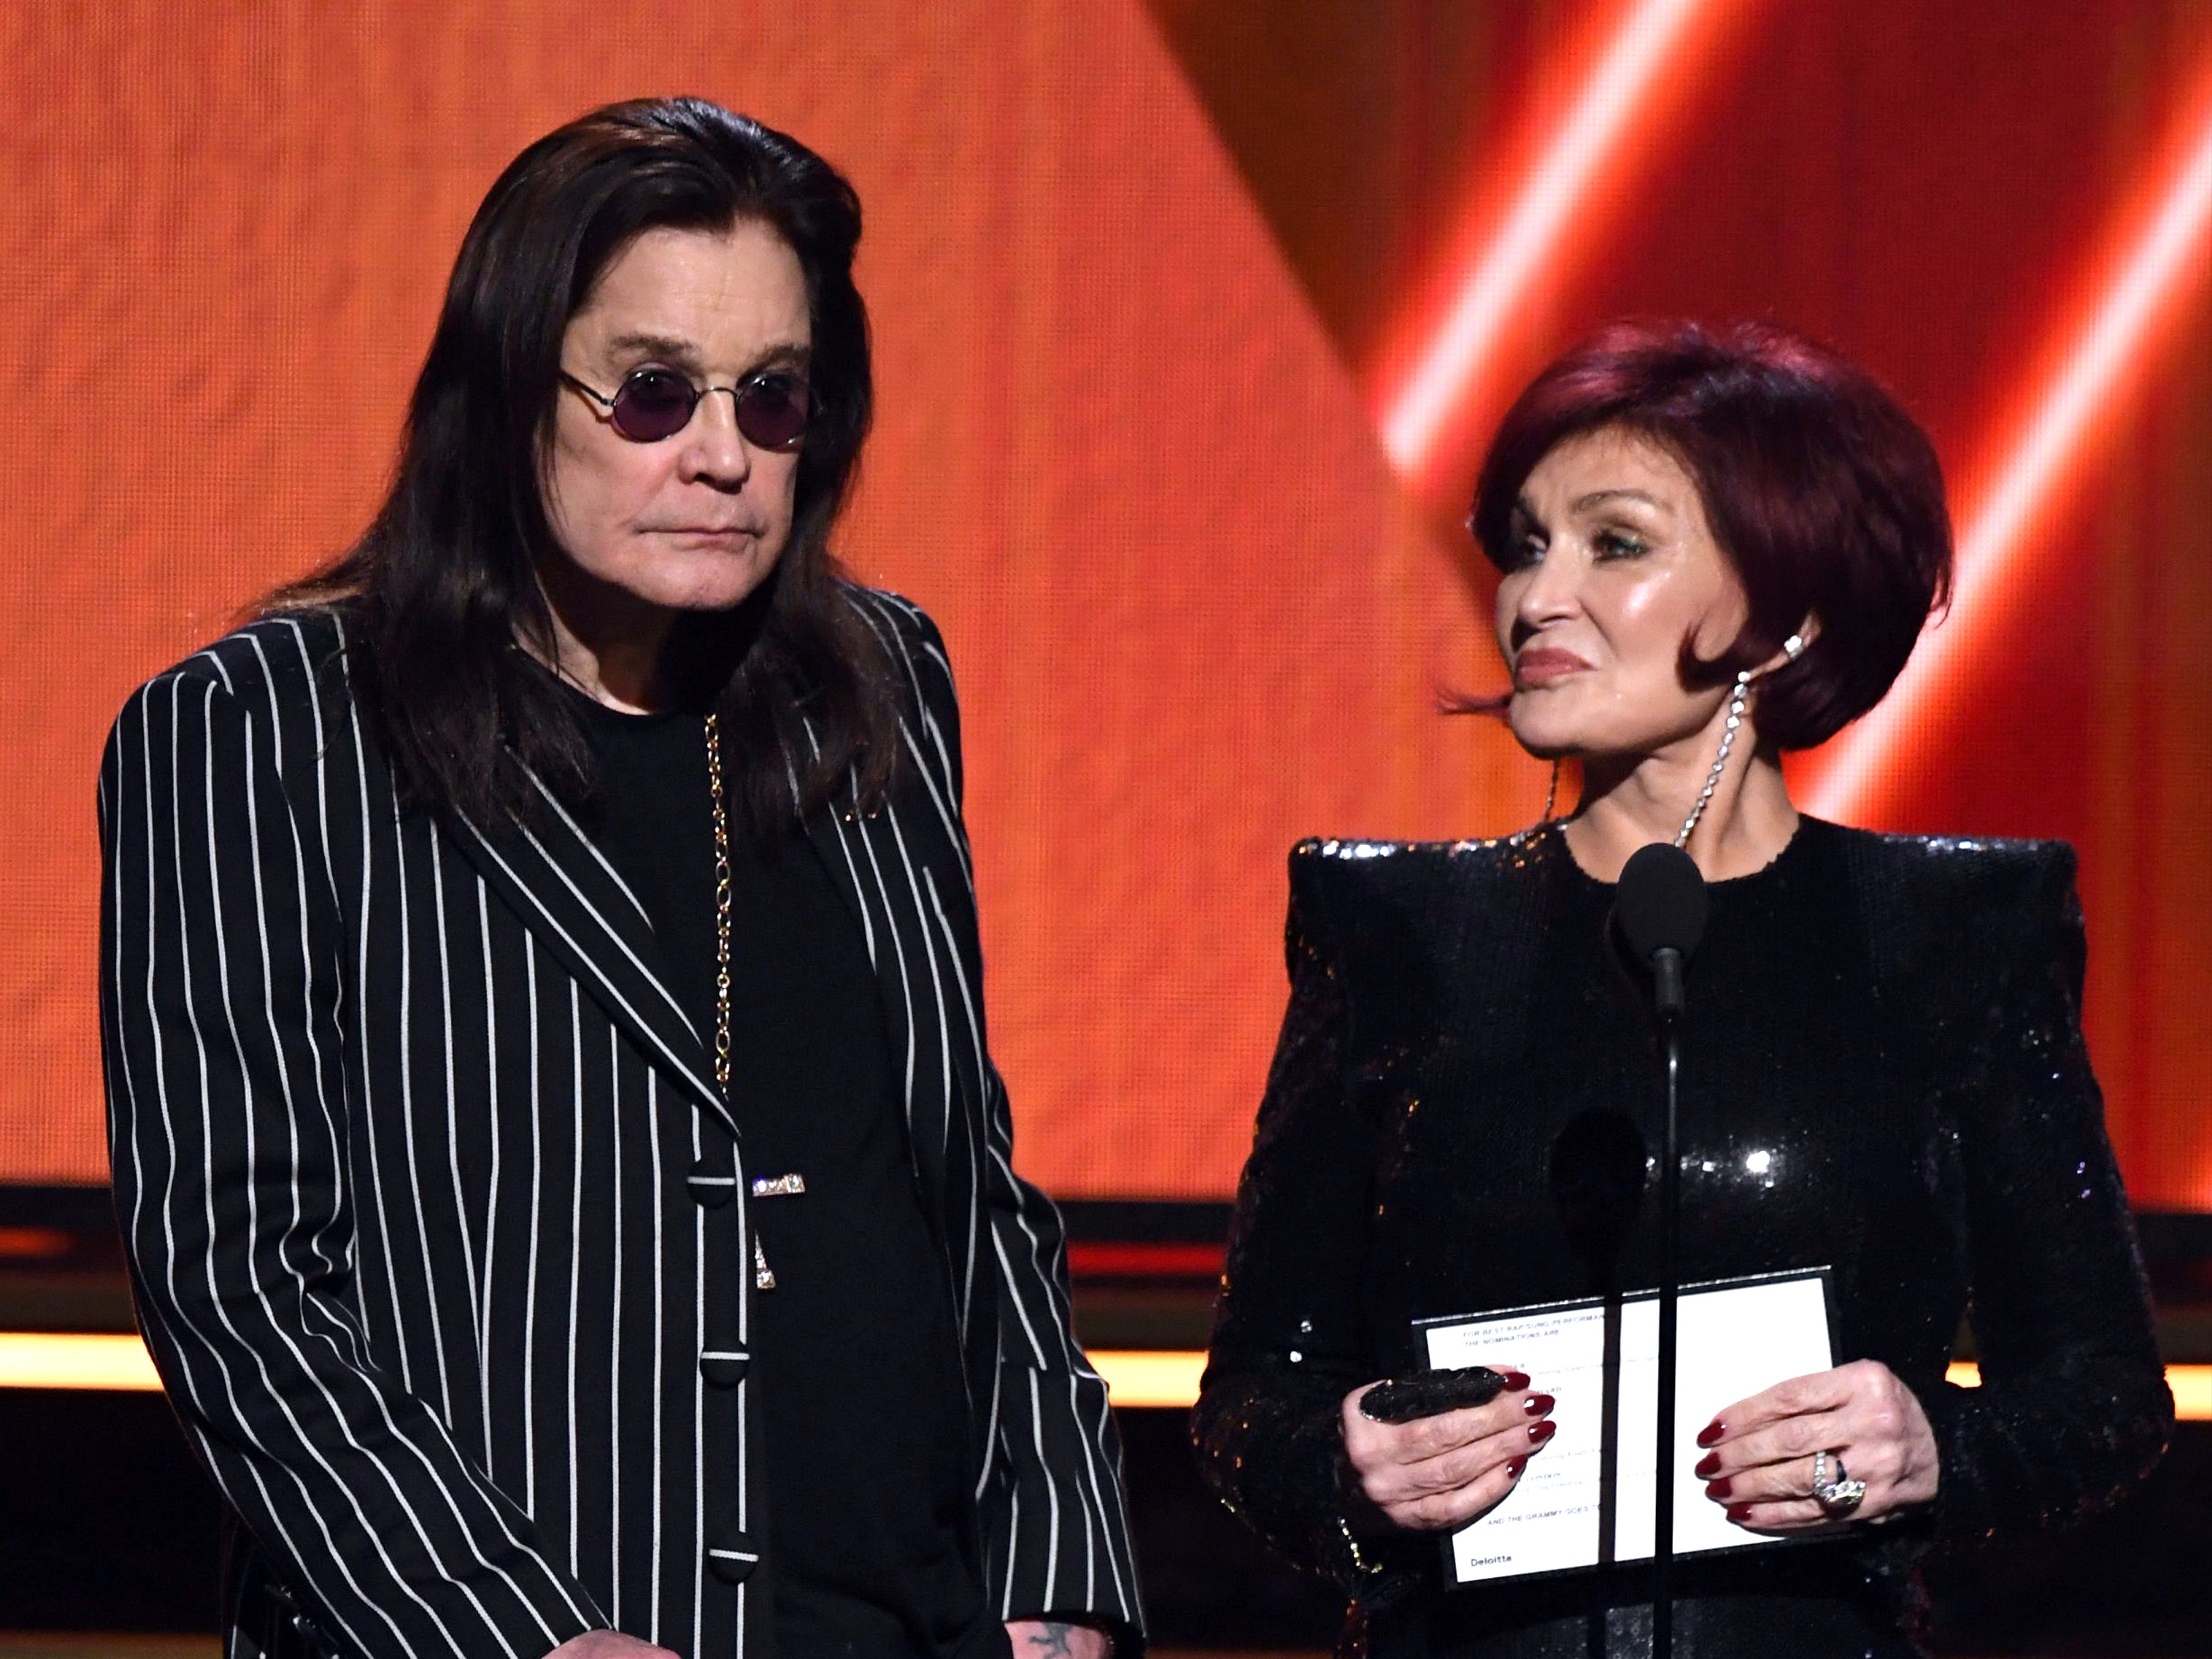 Sharon Osbourne is the longtime manager of her husband, rock star Ozzy Osbourne